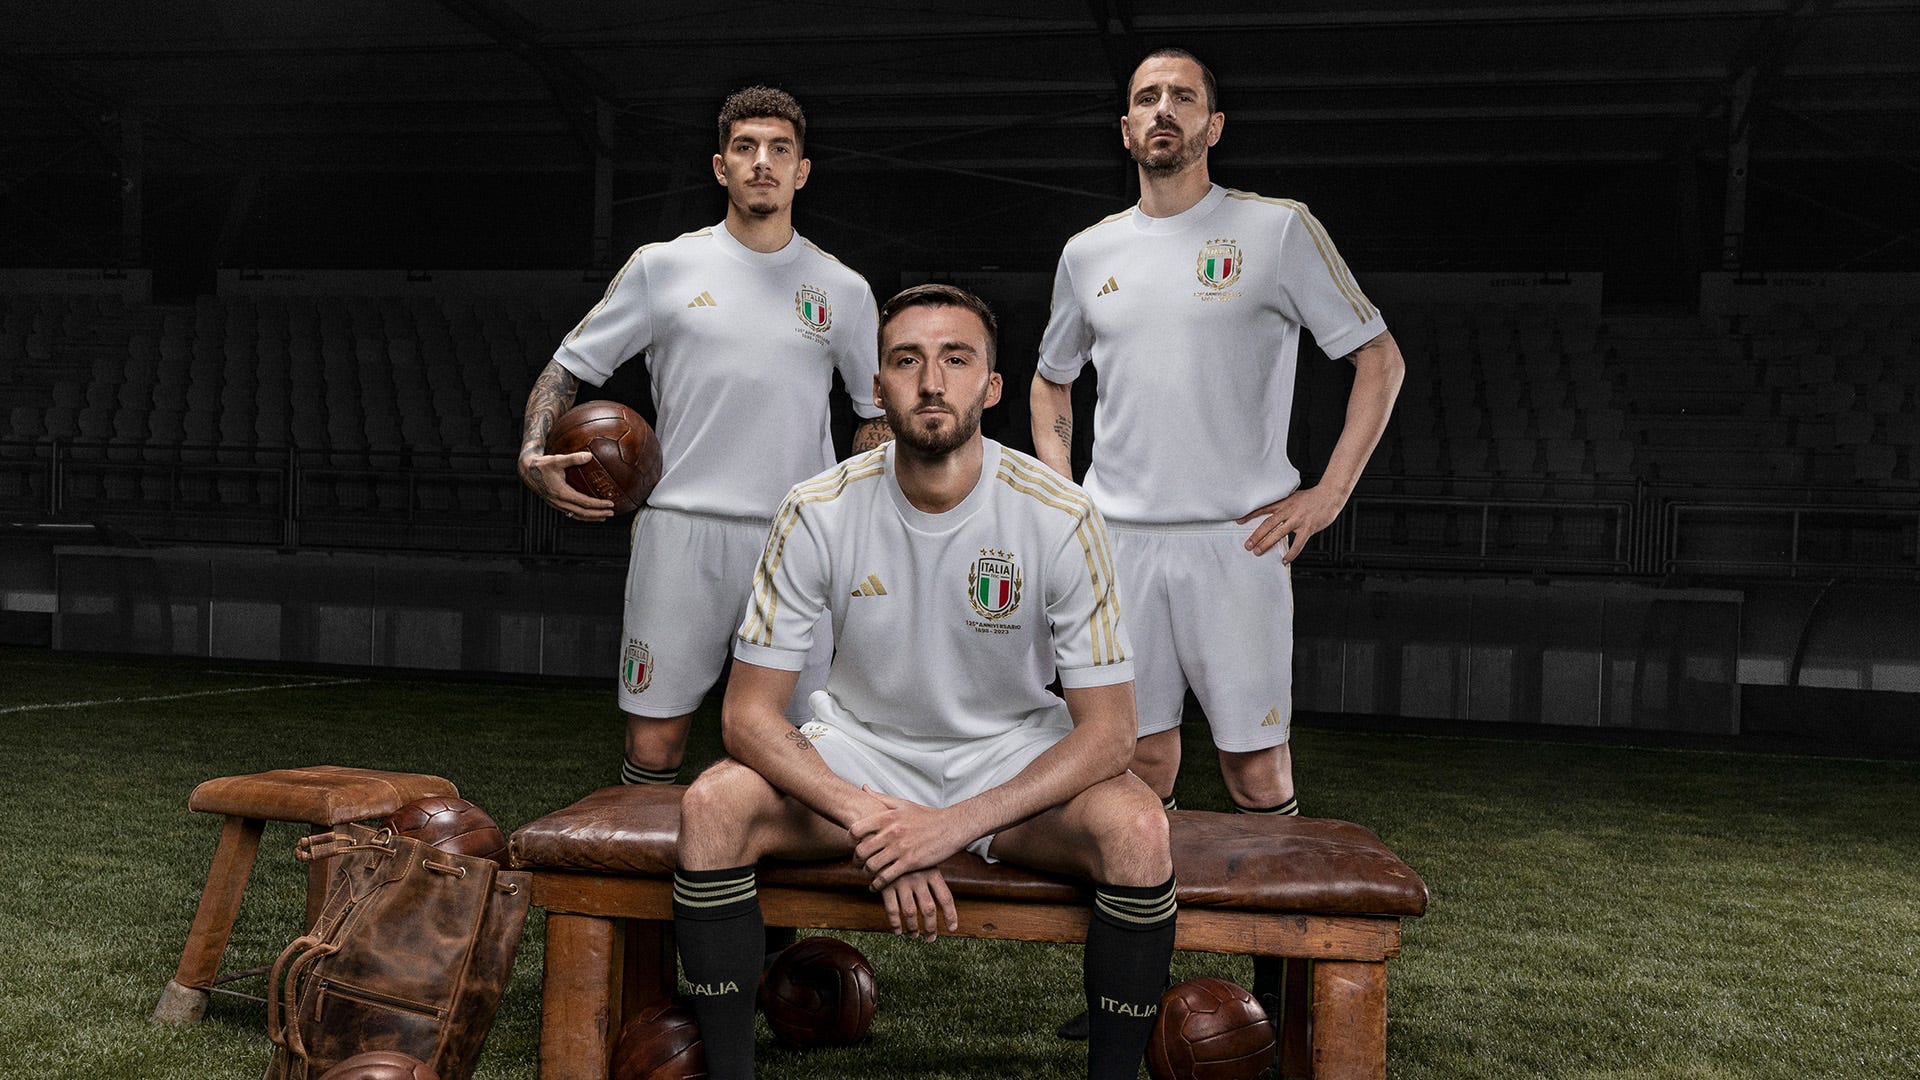 Italy soccer legends' kits